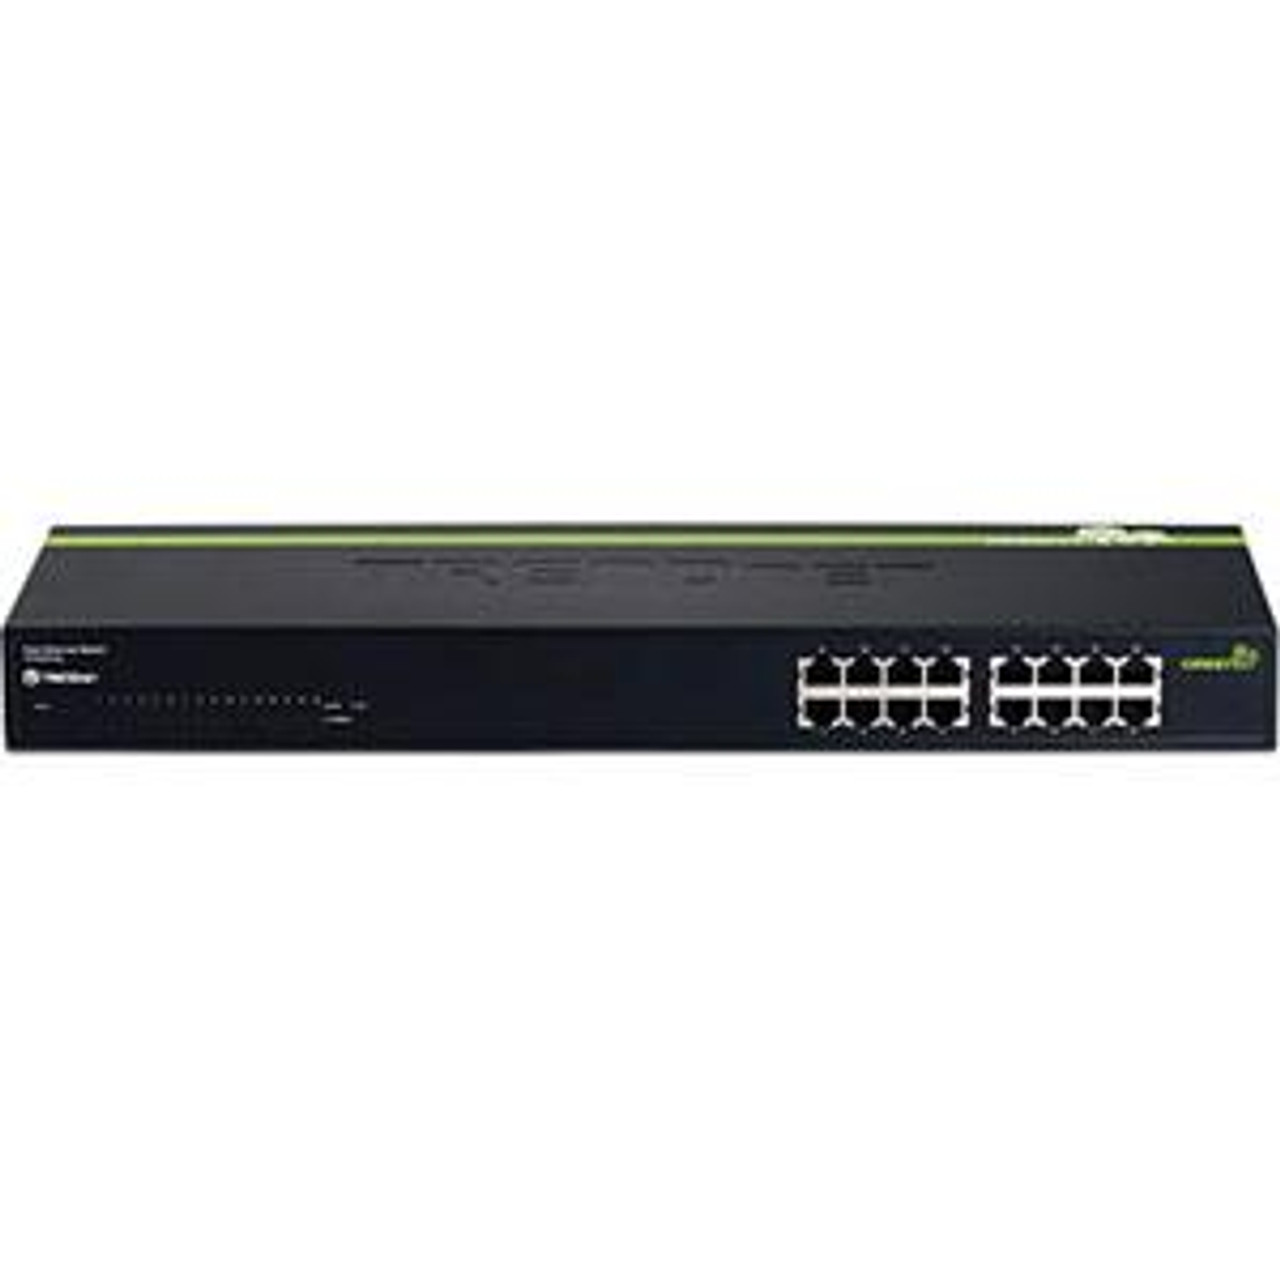 TE100-S16G TRENDnet 16-Port 10/100Mbps GREENnet Switch 16 x 10/100Base-TX LAN